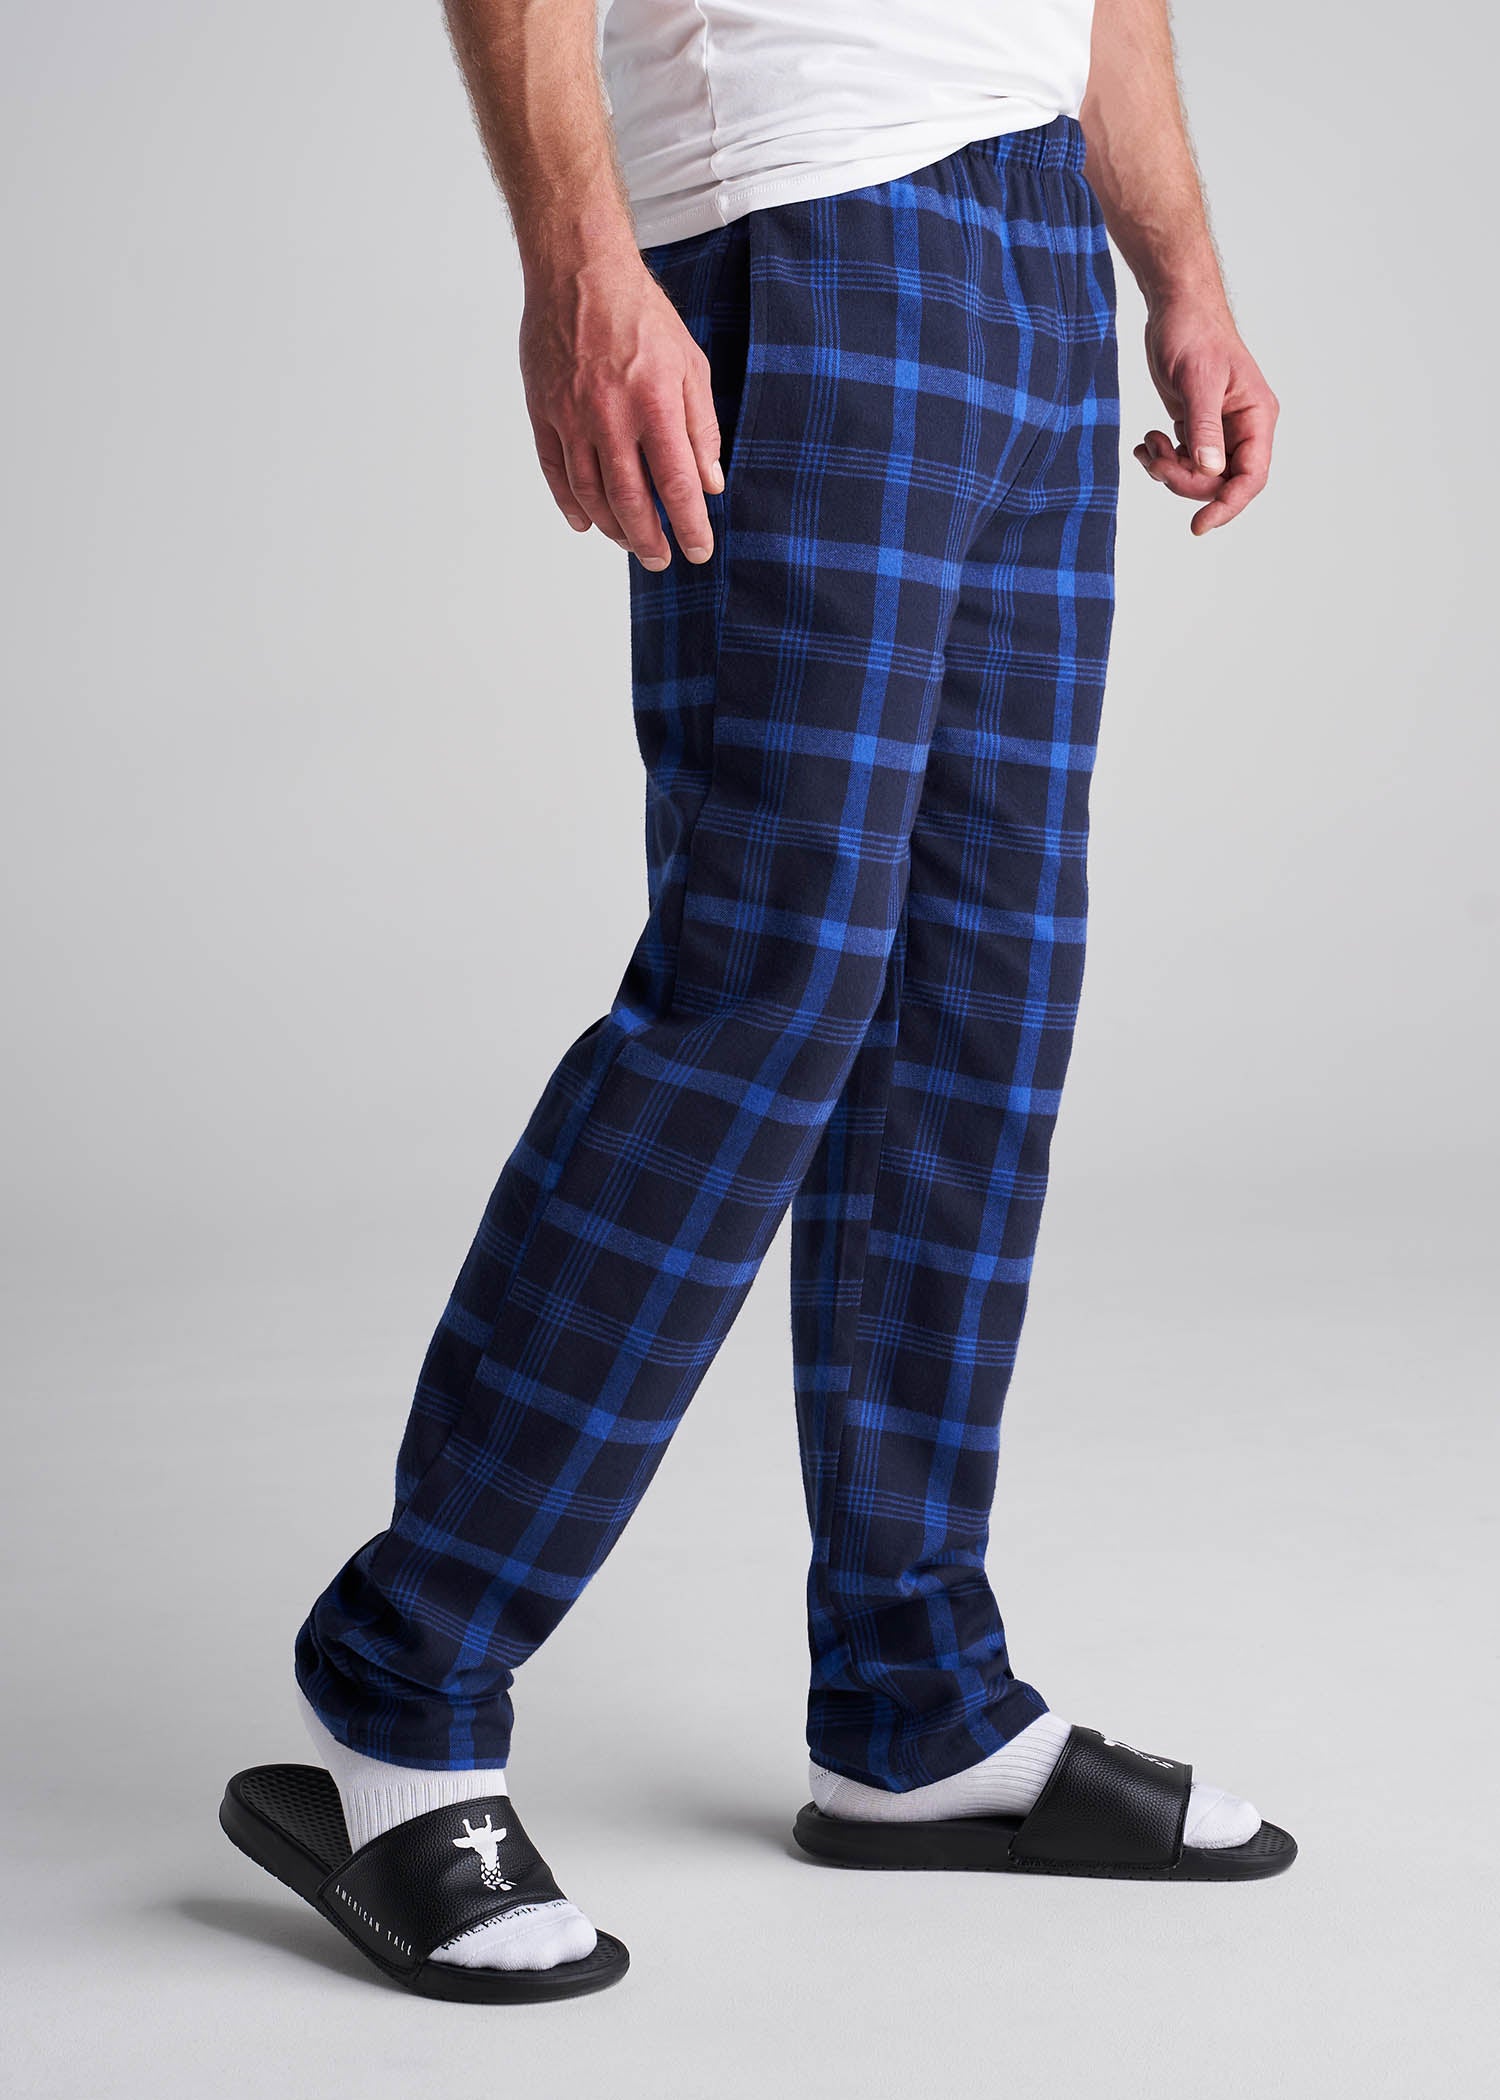 Buy Plus Size Checked Pyjamas & Plus Size Men's Pyjama Pants - Apella